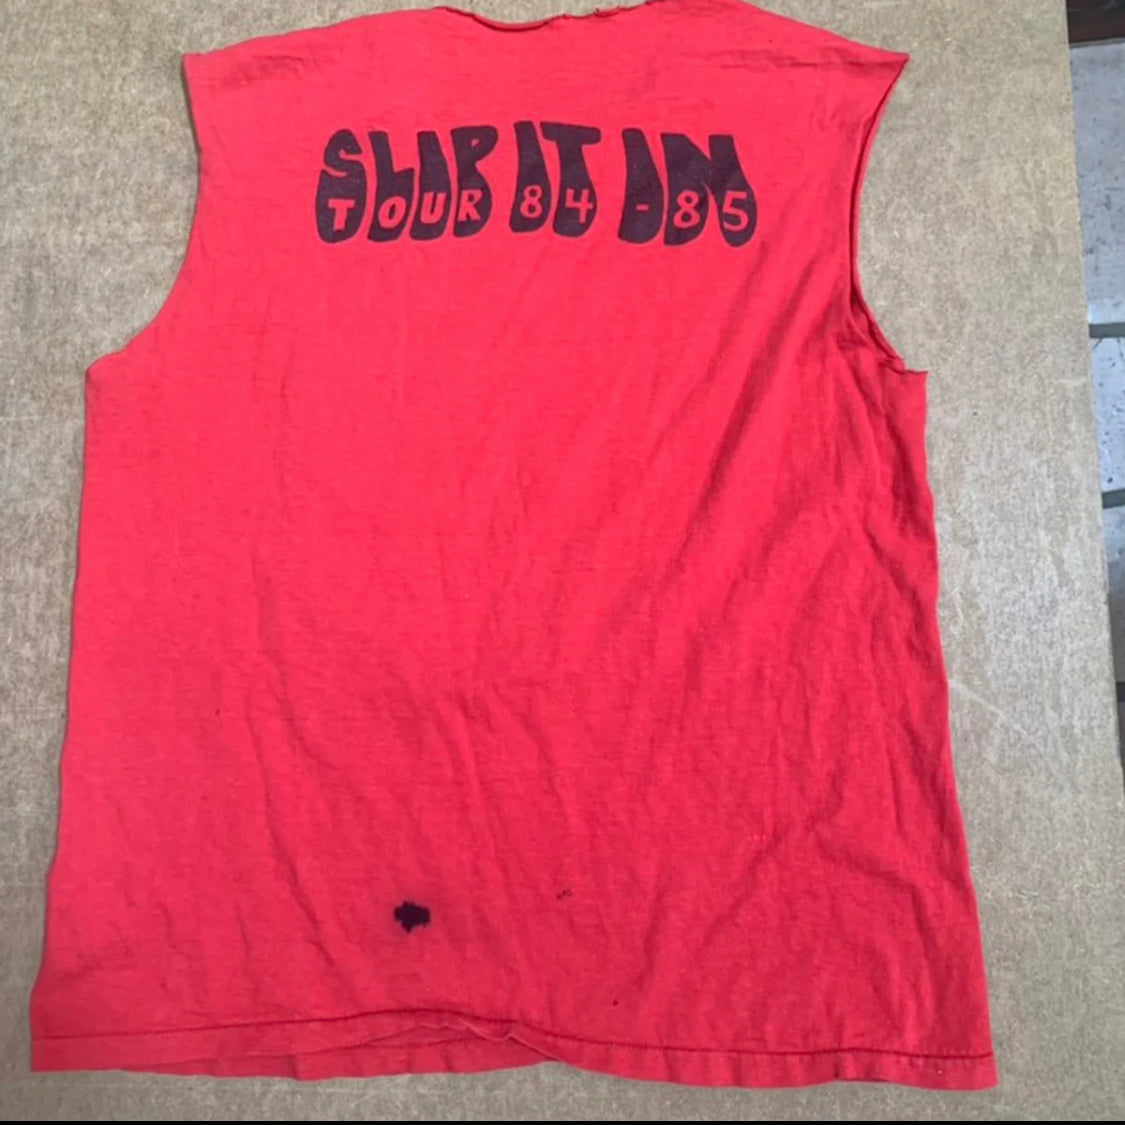 "Black Flag - Slip It In '84-'85" Vintage Tour T-shirt